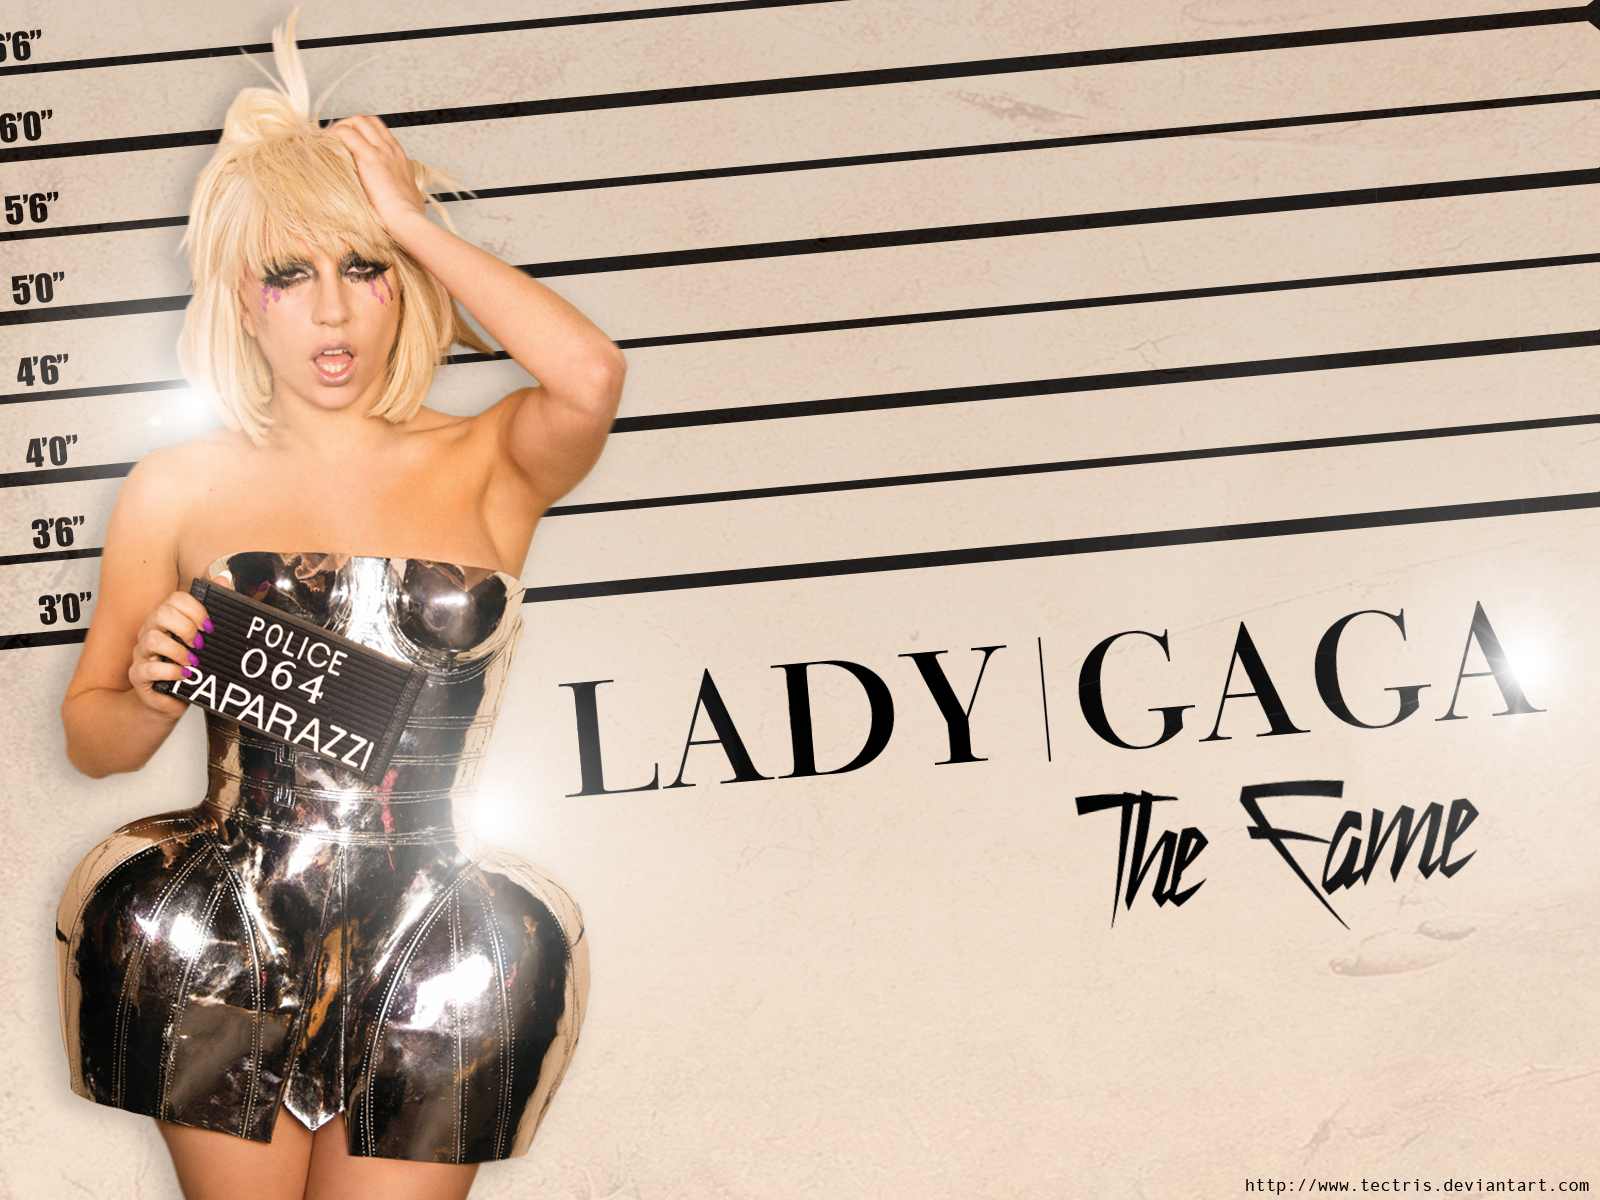 http://1.bp.blogspot.com/-MYhtW2_Pf8I/TeQbsVG9RSI/AAAAAAAAAHE/ussfNVgeXVQ/s1600/Lady_Gaga_Wallpaper_the_fame_mugshots_by_tectris.jpg